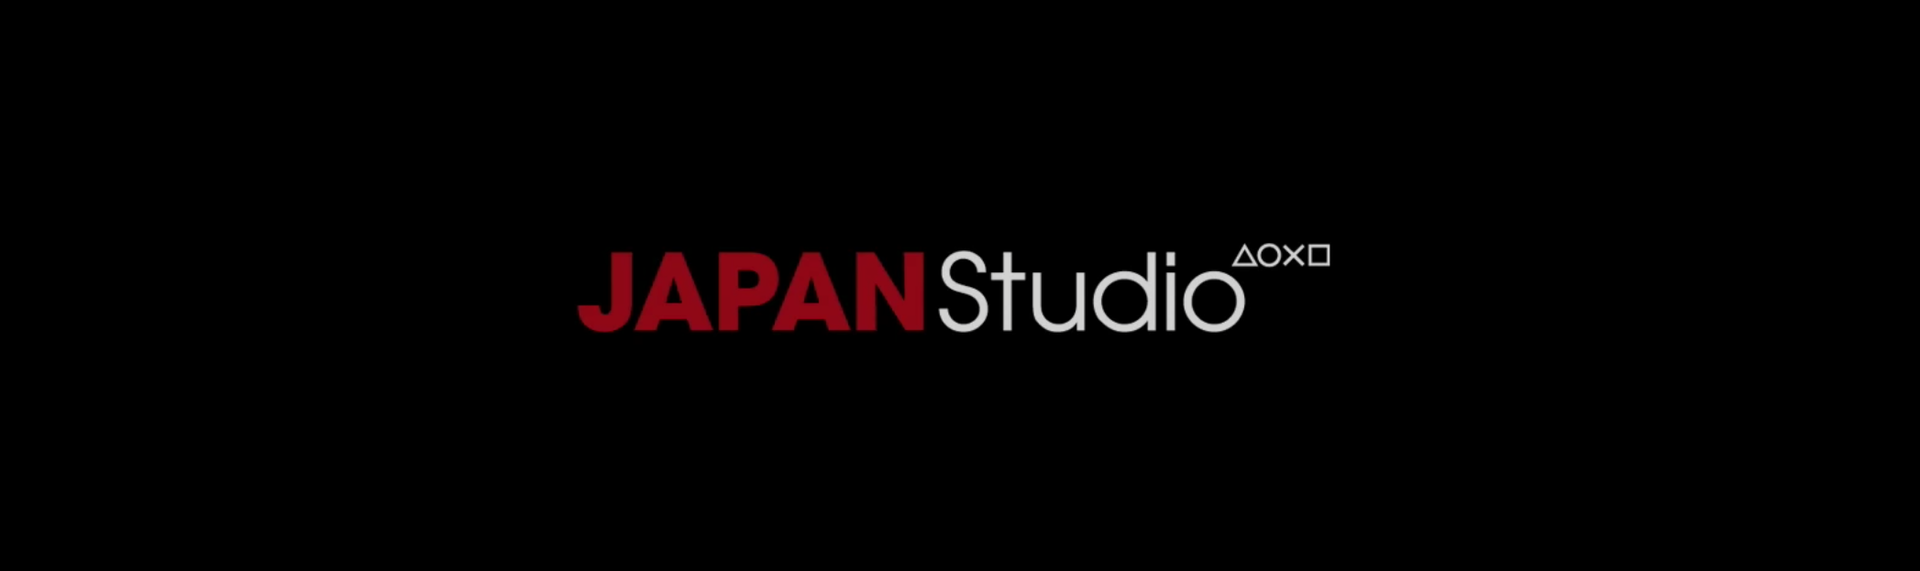 tromme forurening Spytte ud Is JAPAN Studio the PlayStation equivalent to Nintendo R&D1? | Famiboards